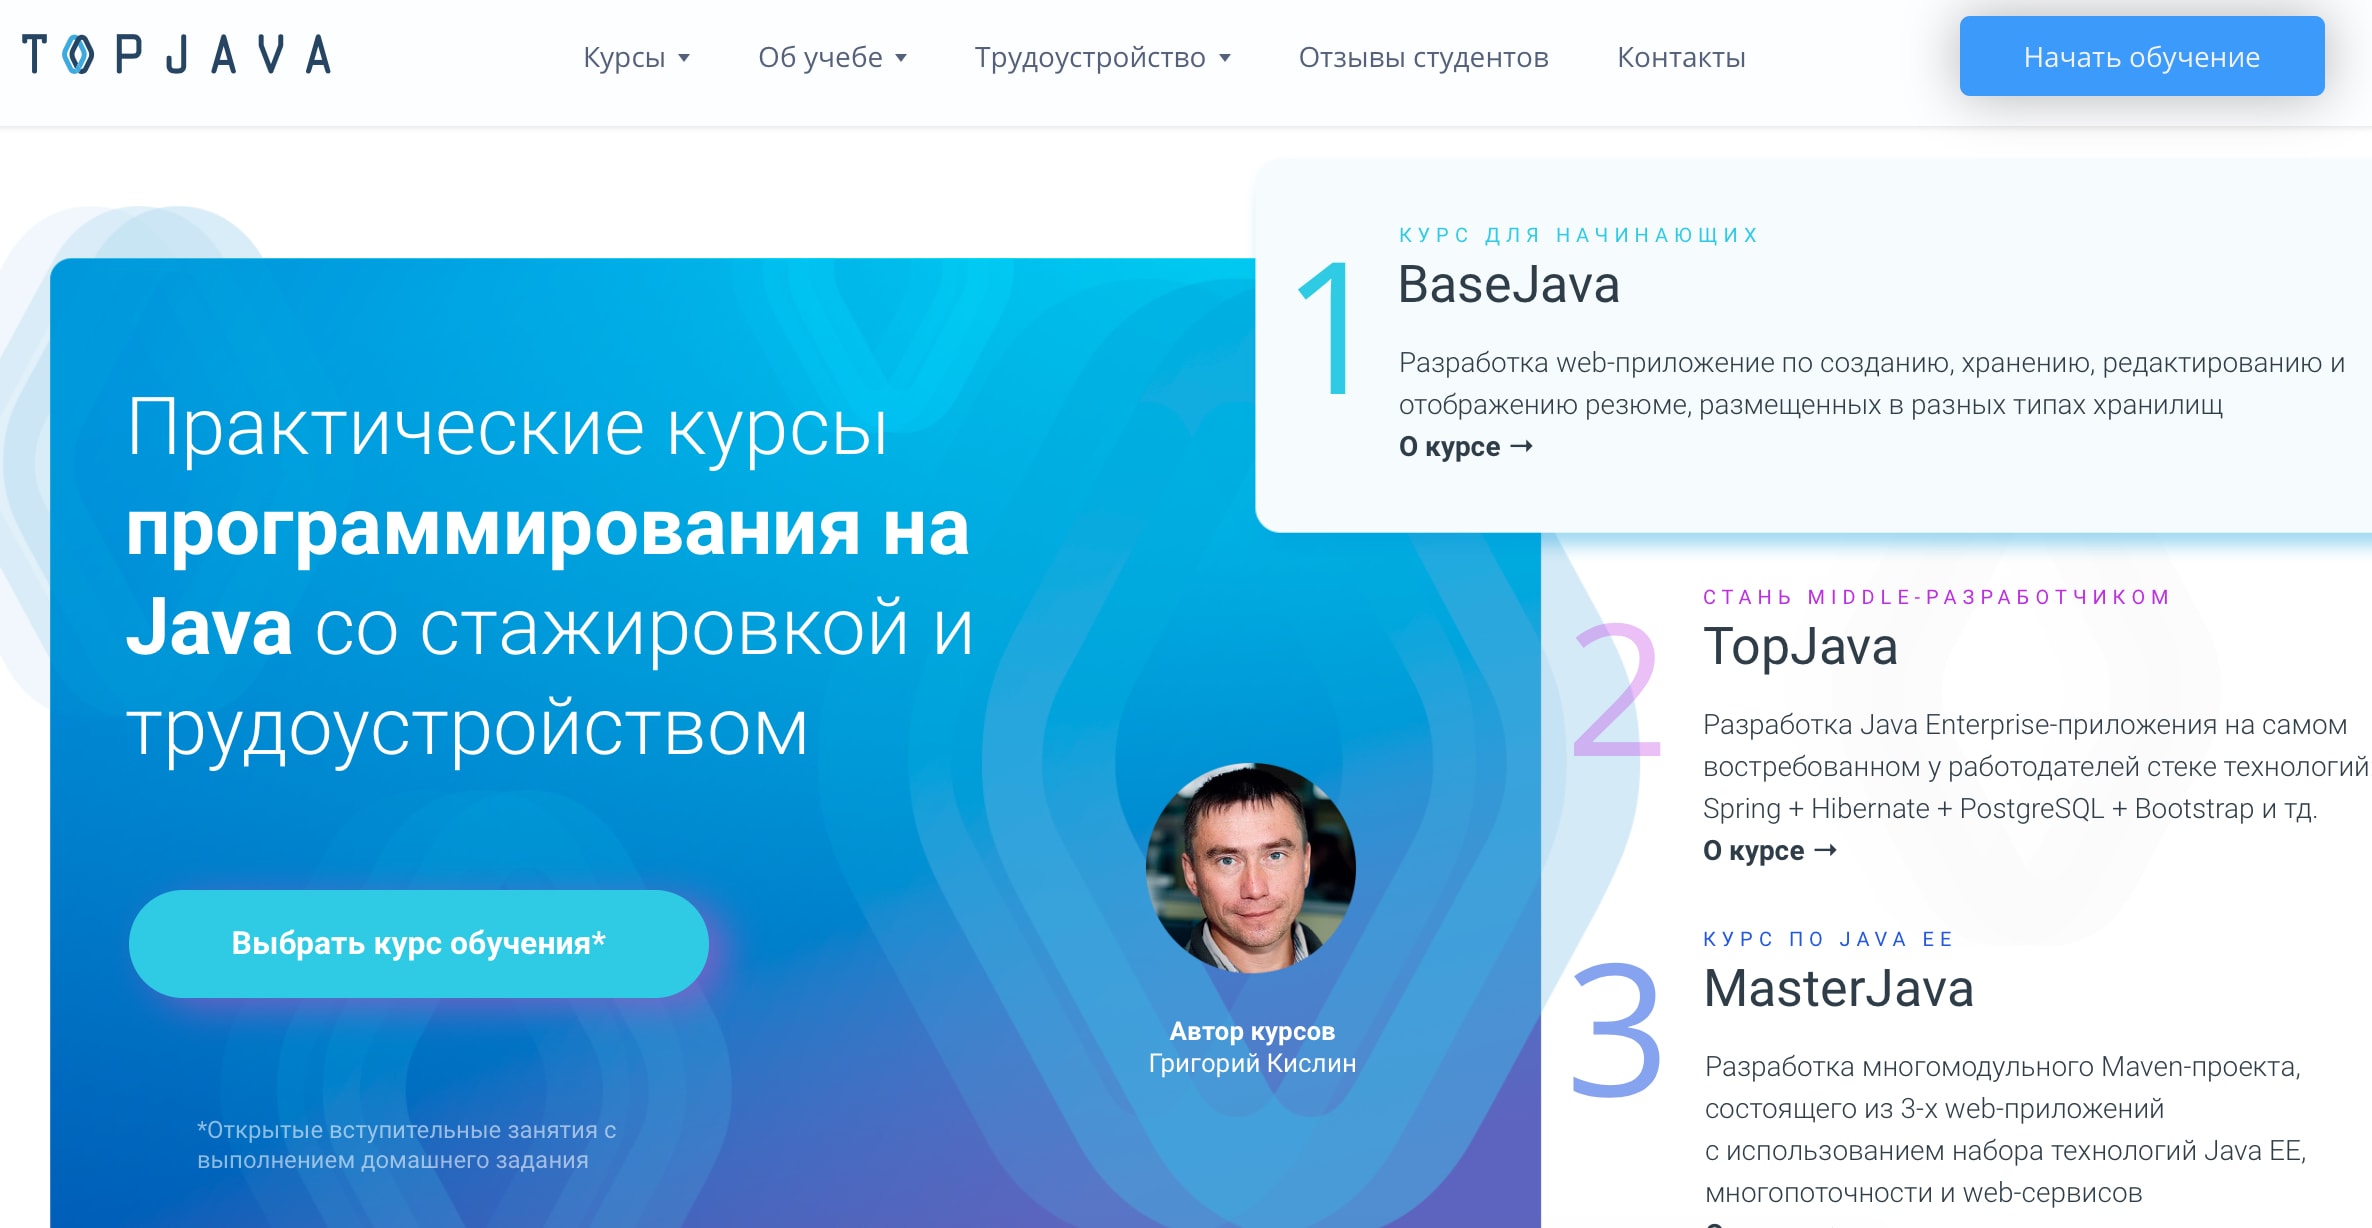 TOPJAVA.ru, скриншот интерфейса 1